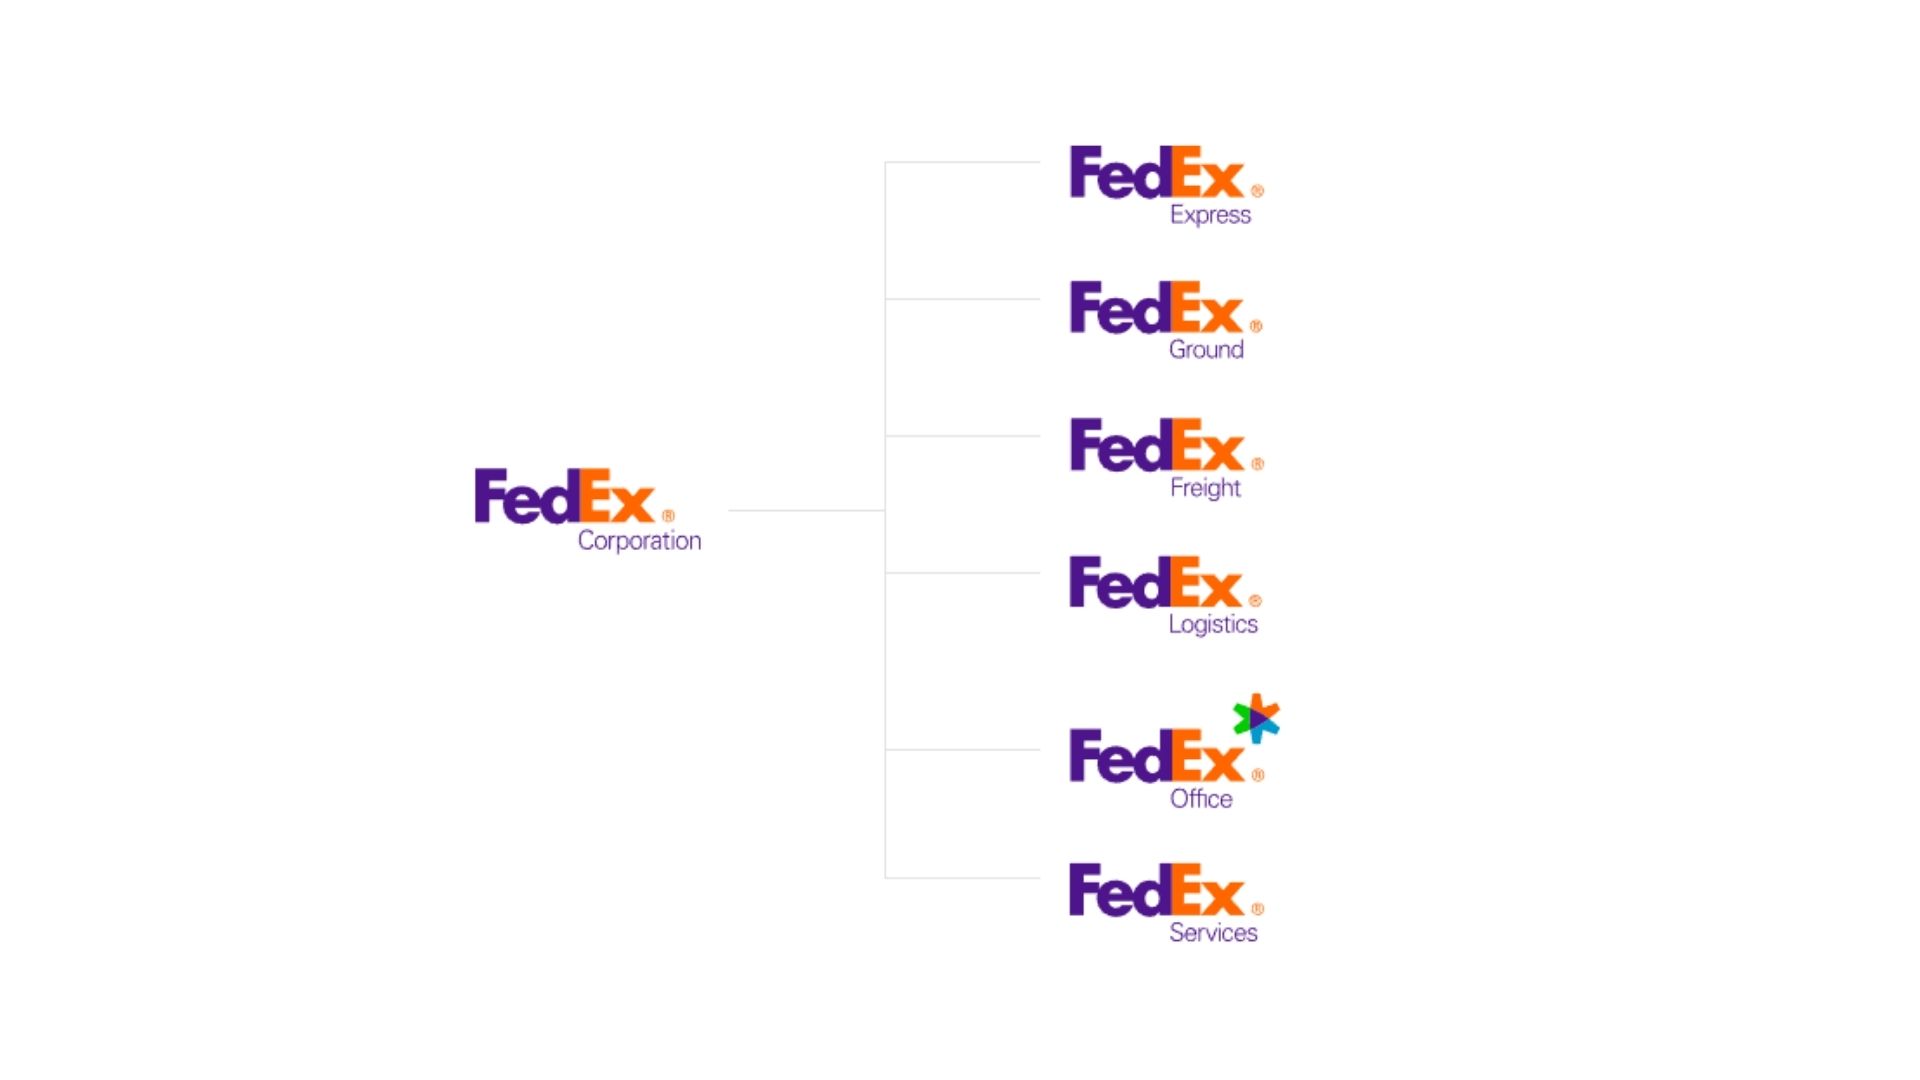 Fedex company brand structure